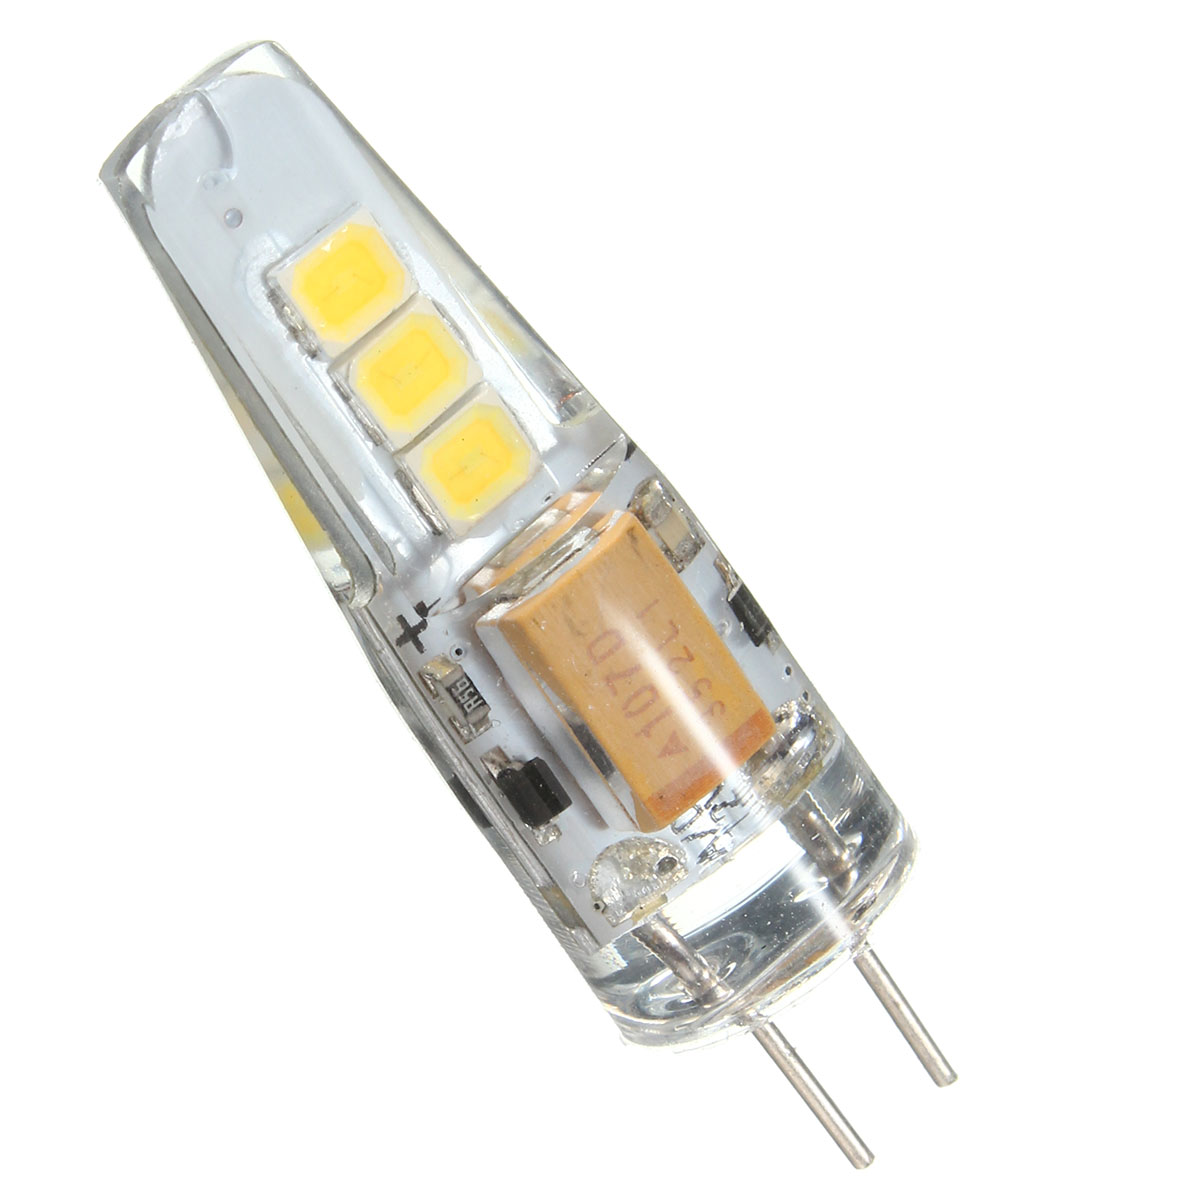 Светодиодная лампа led g4. Лампа led g4 2w 12v 6500k. Лампа 6 v g4 led. Светодиодные лампы 12v g4 RGB. Лампа 12v g4 3w 4500k.